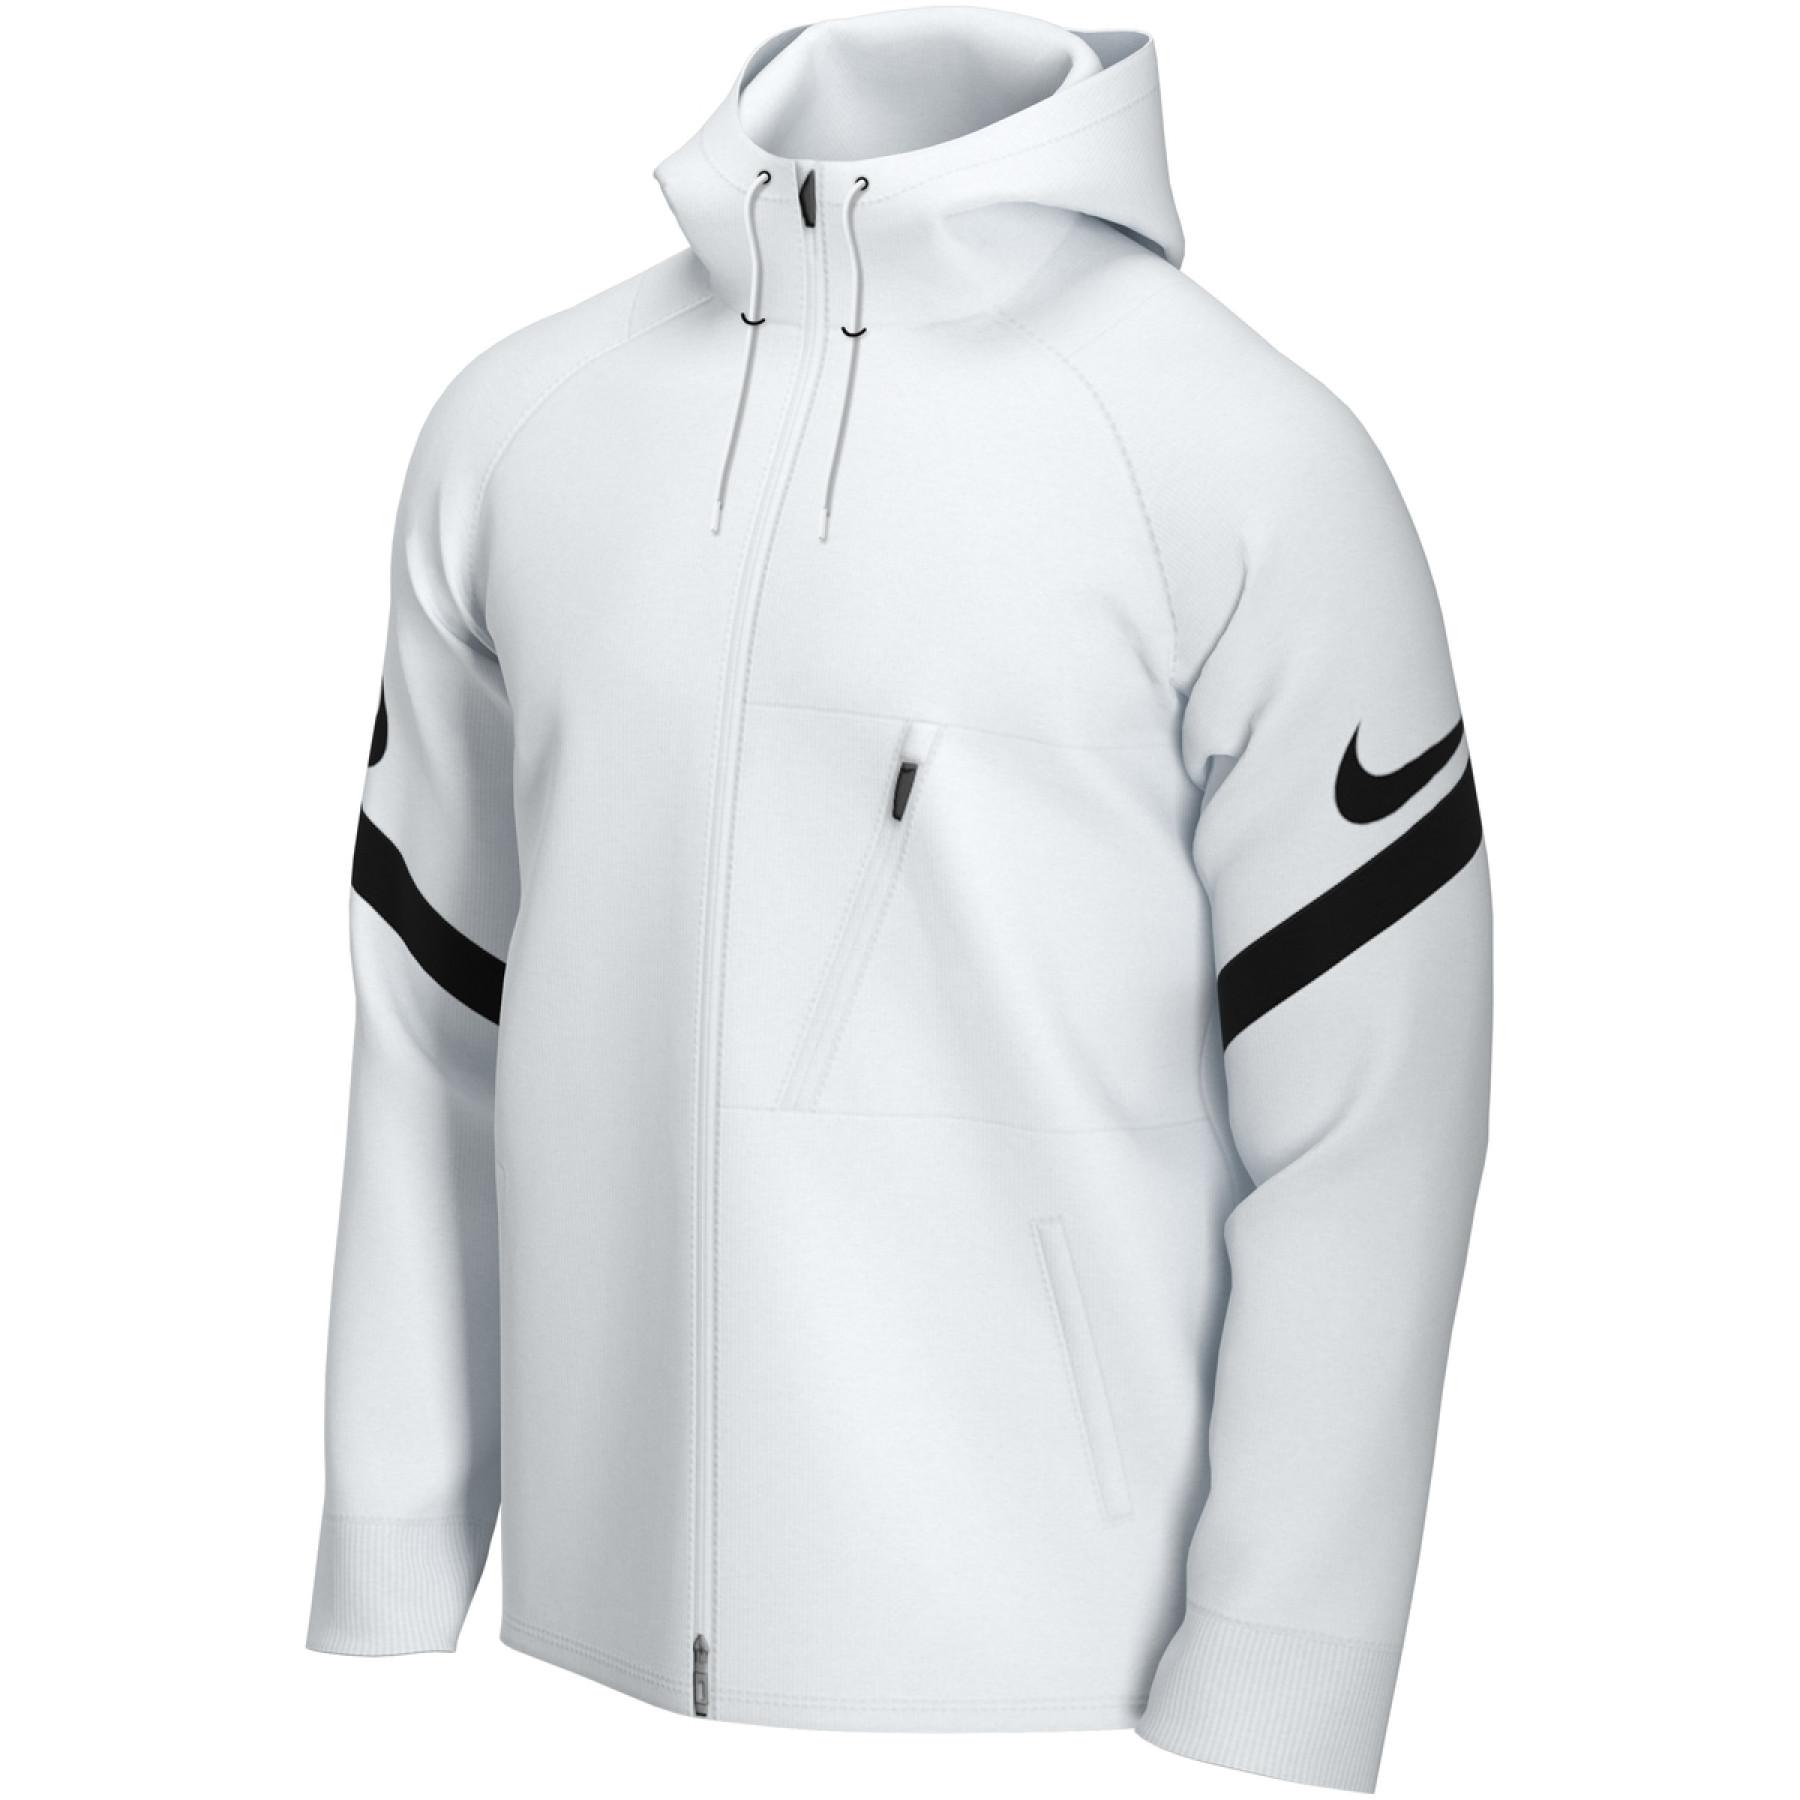 Jacket Nike Dynamic Fit StrikeE21